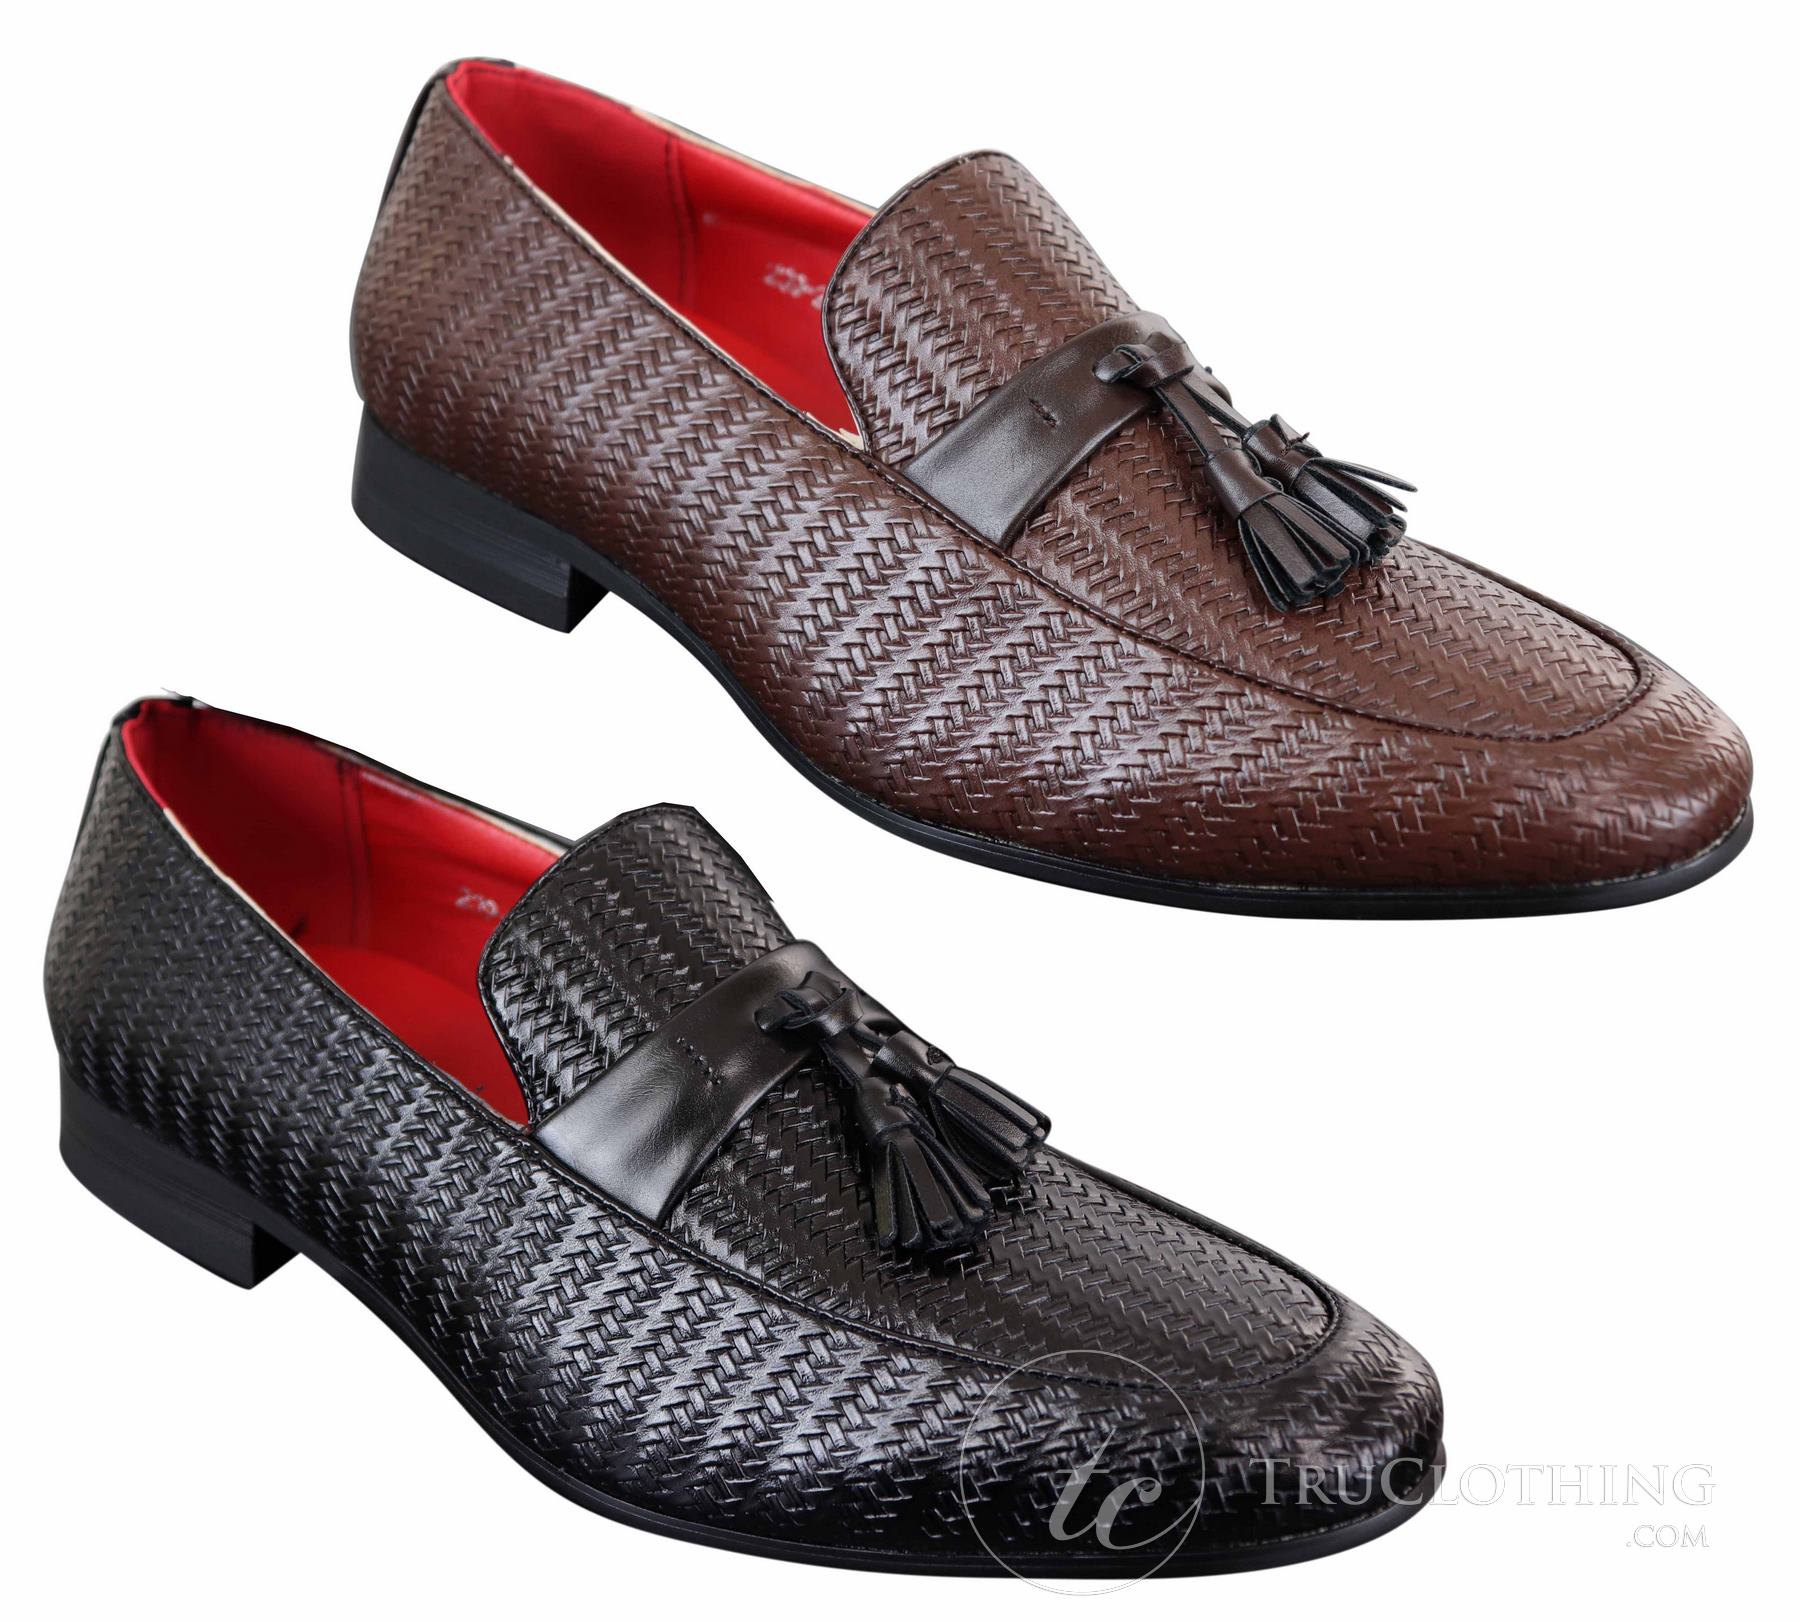 Elong Mens Snake Crocodile Leather PU Loafers Driving Shoes Slip On Tassel Comfort Vintage red